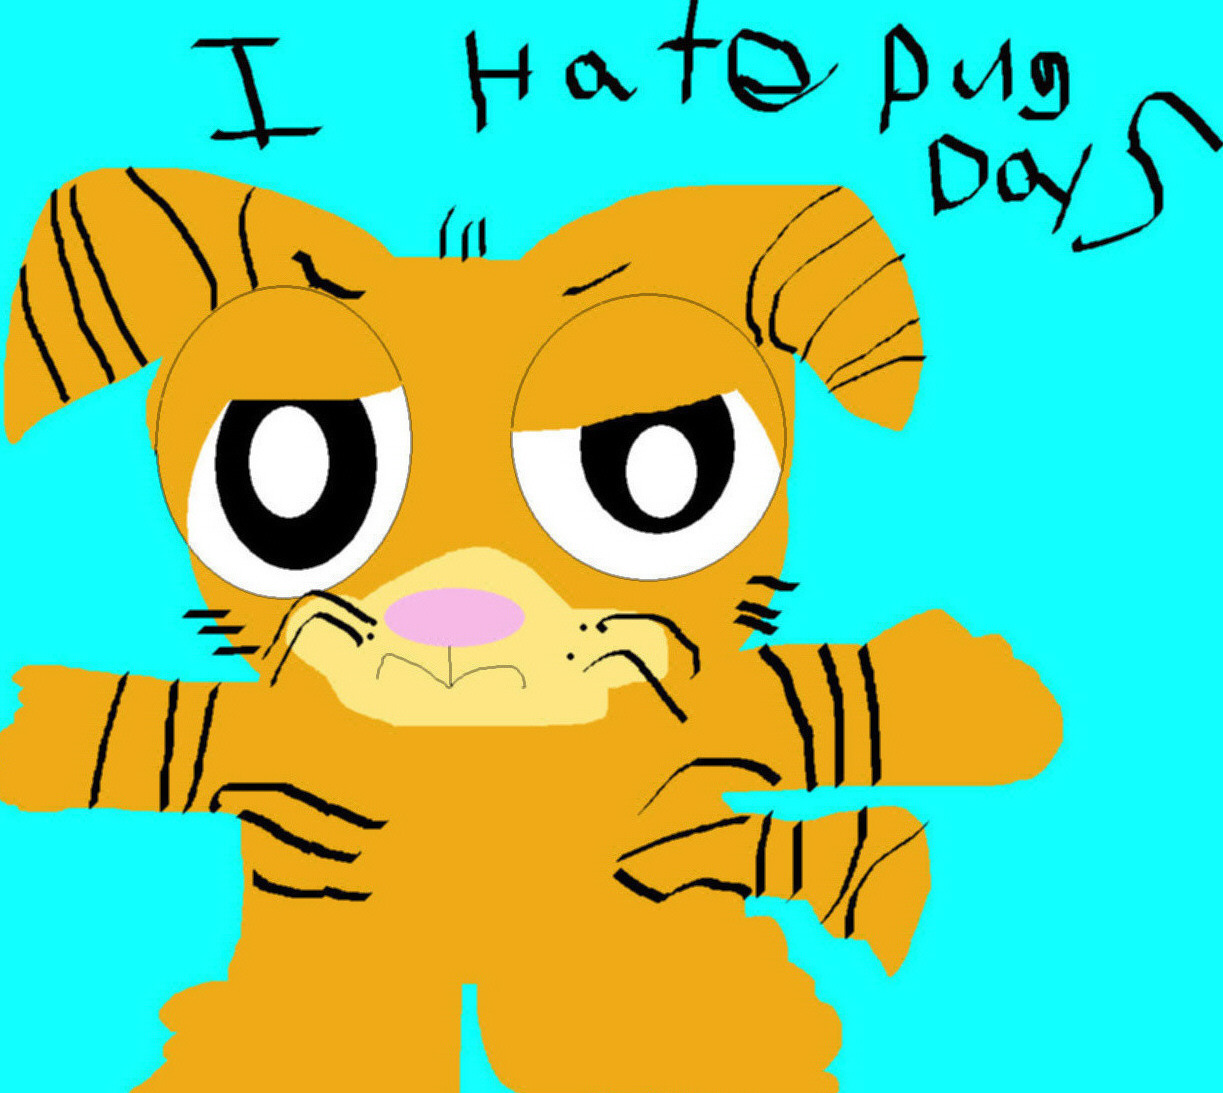 I Hate Pug Days Garfield  MS Paint^^ by Falconlobo